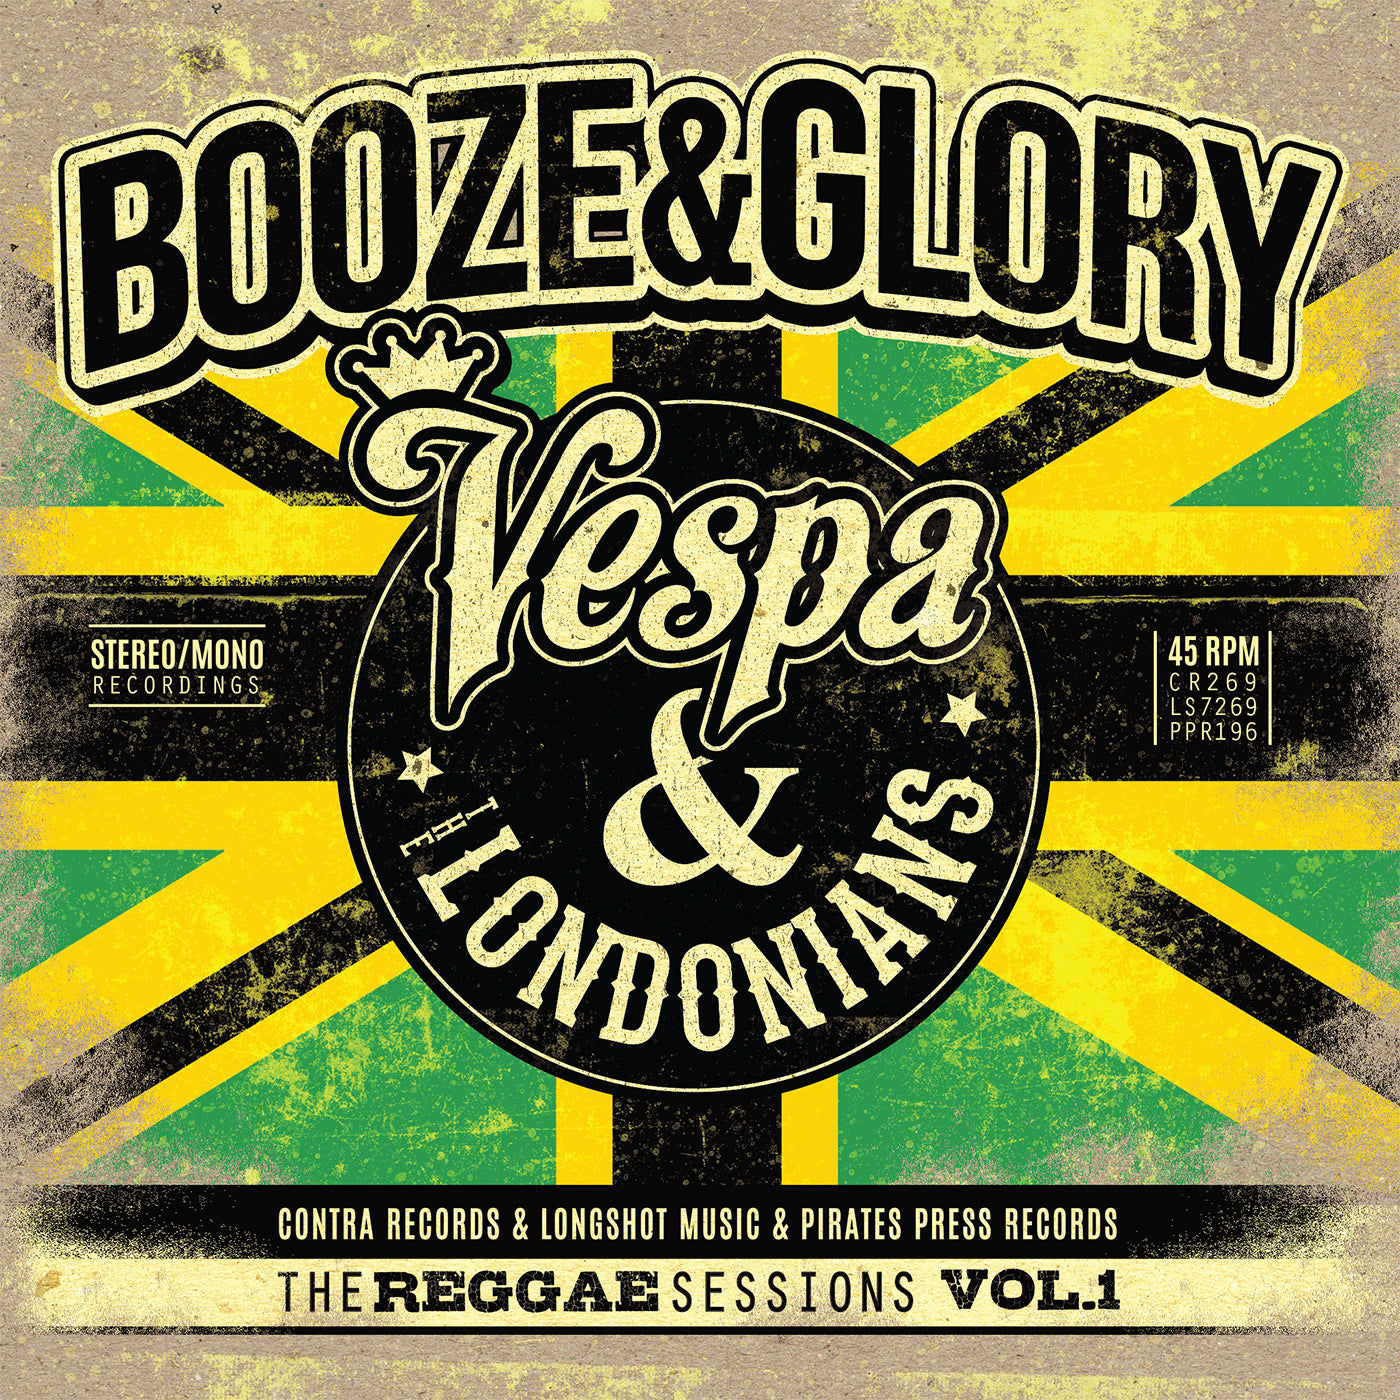 Booze & Glory - The Reggae Sessions Vol 1 3x7"